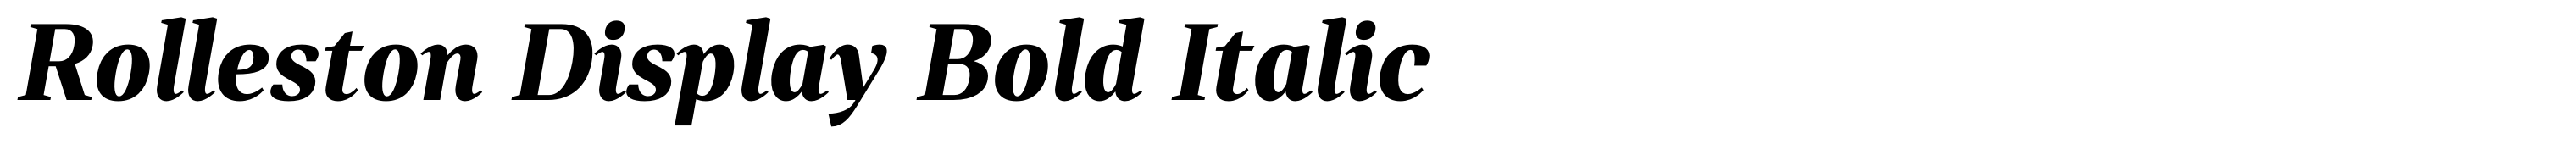 Rolleston Display Bold Italic